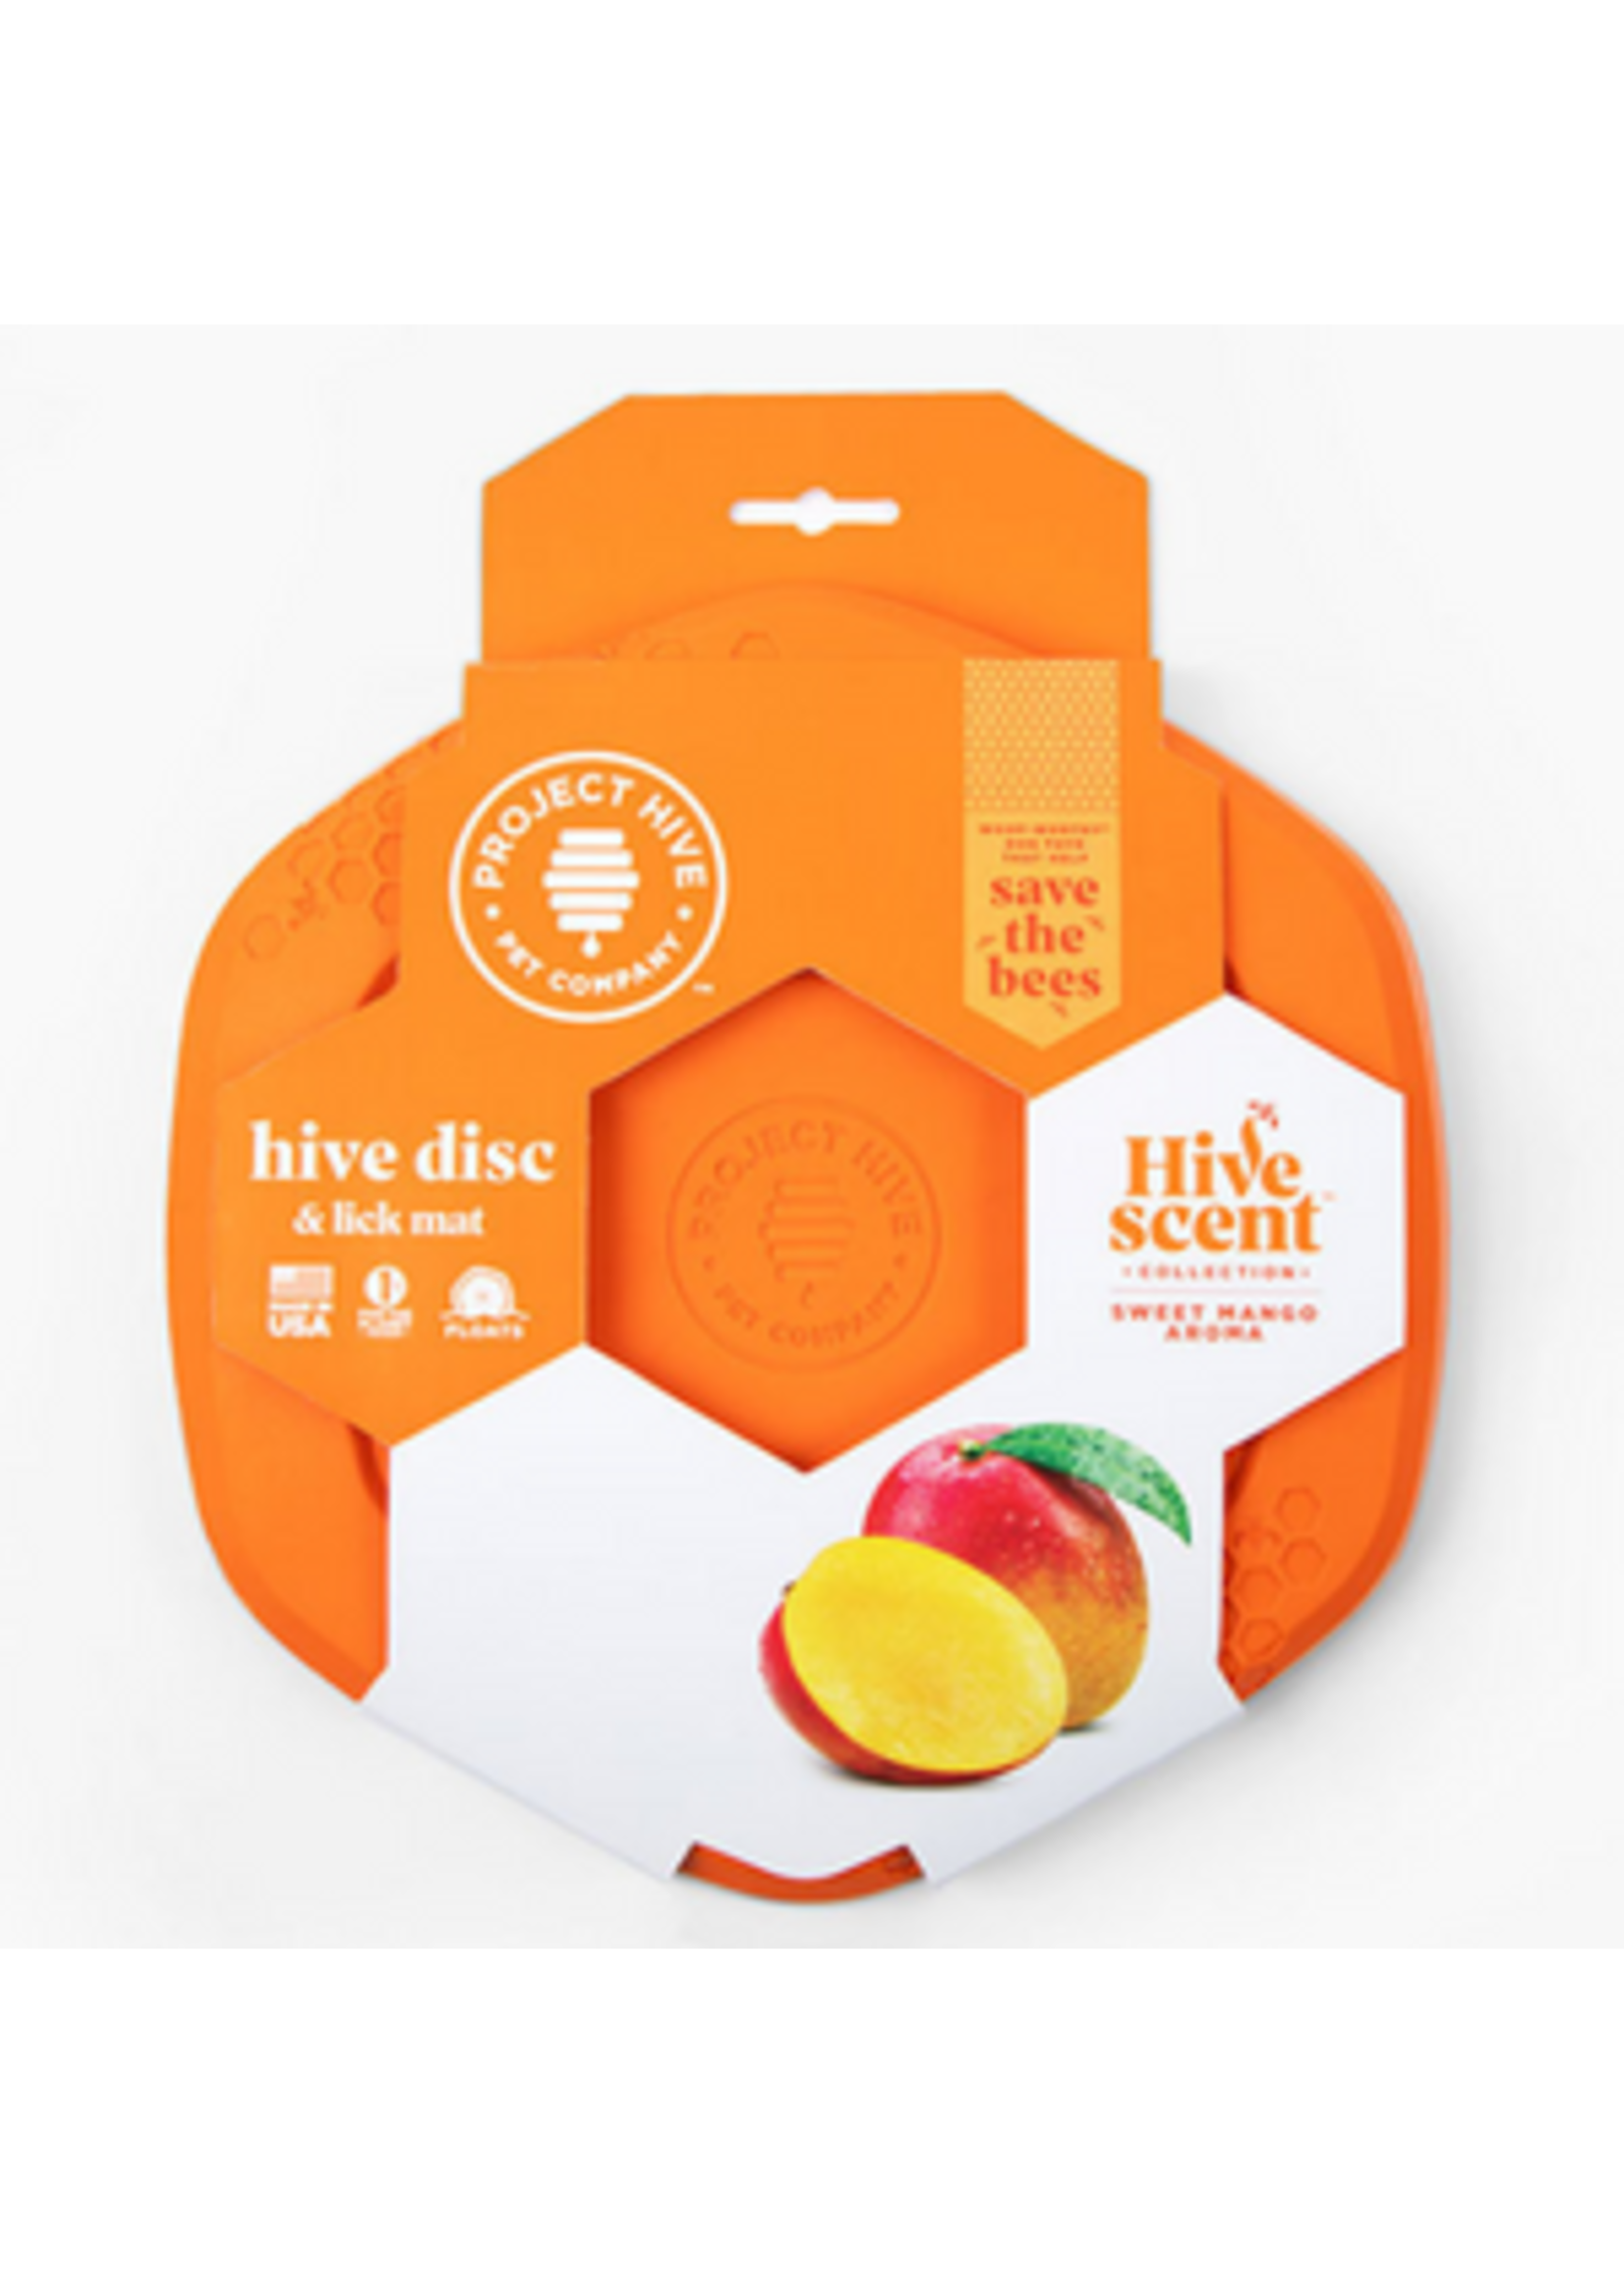 Project Hive Project Hive Disc & Lick Mat